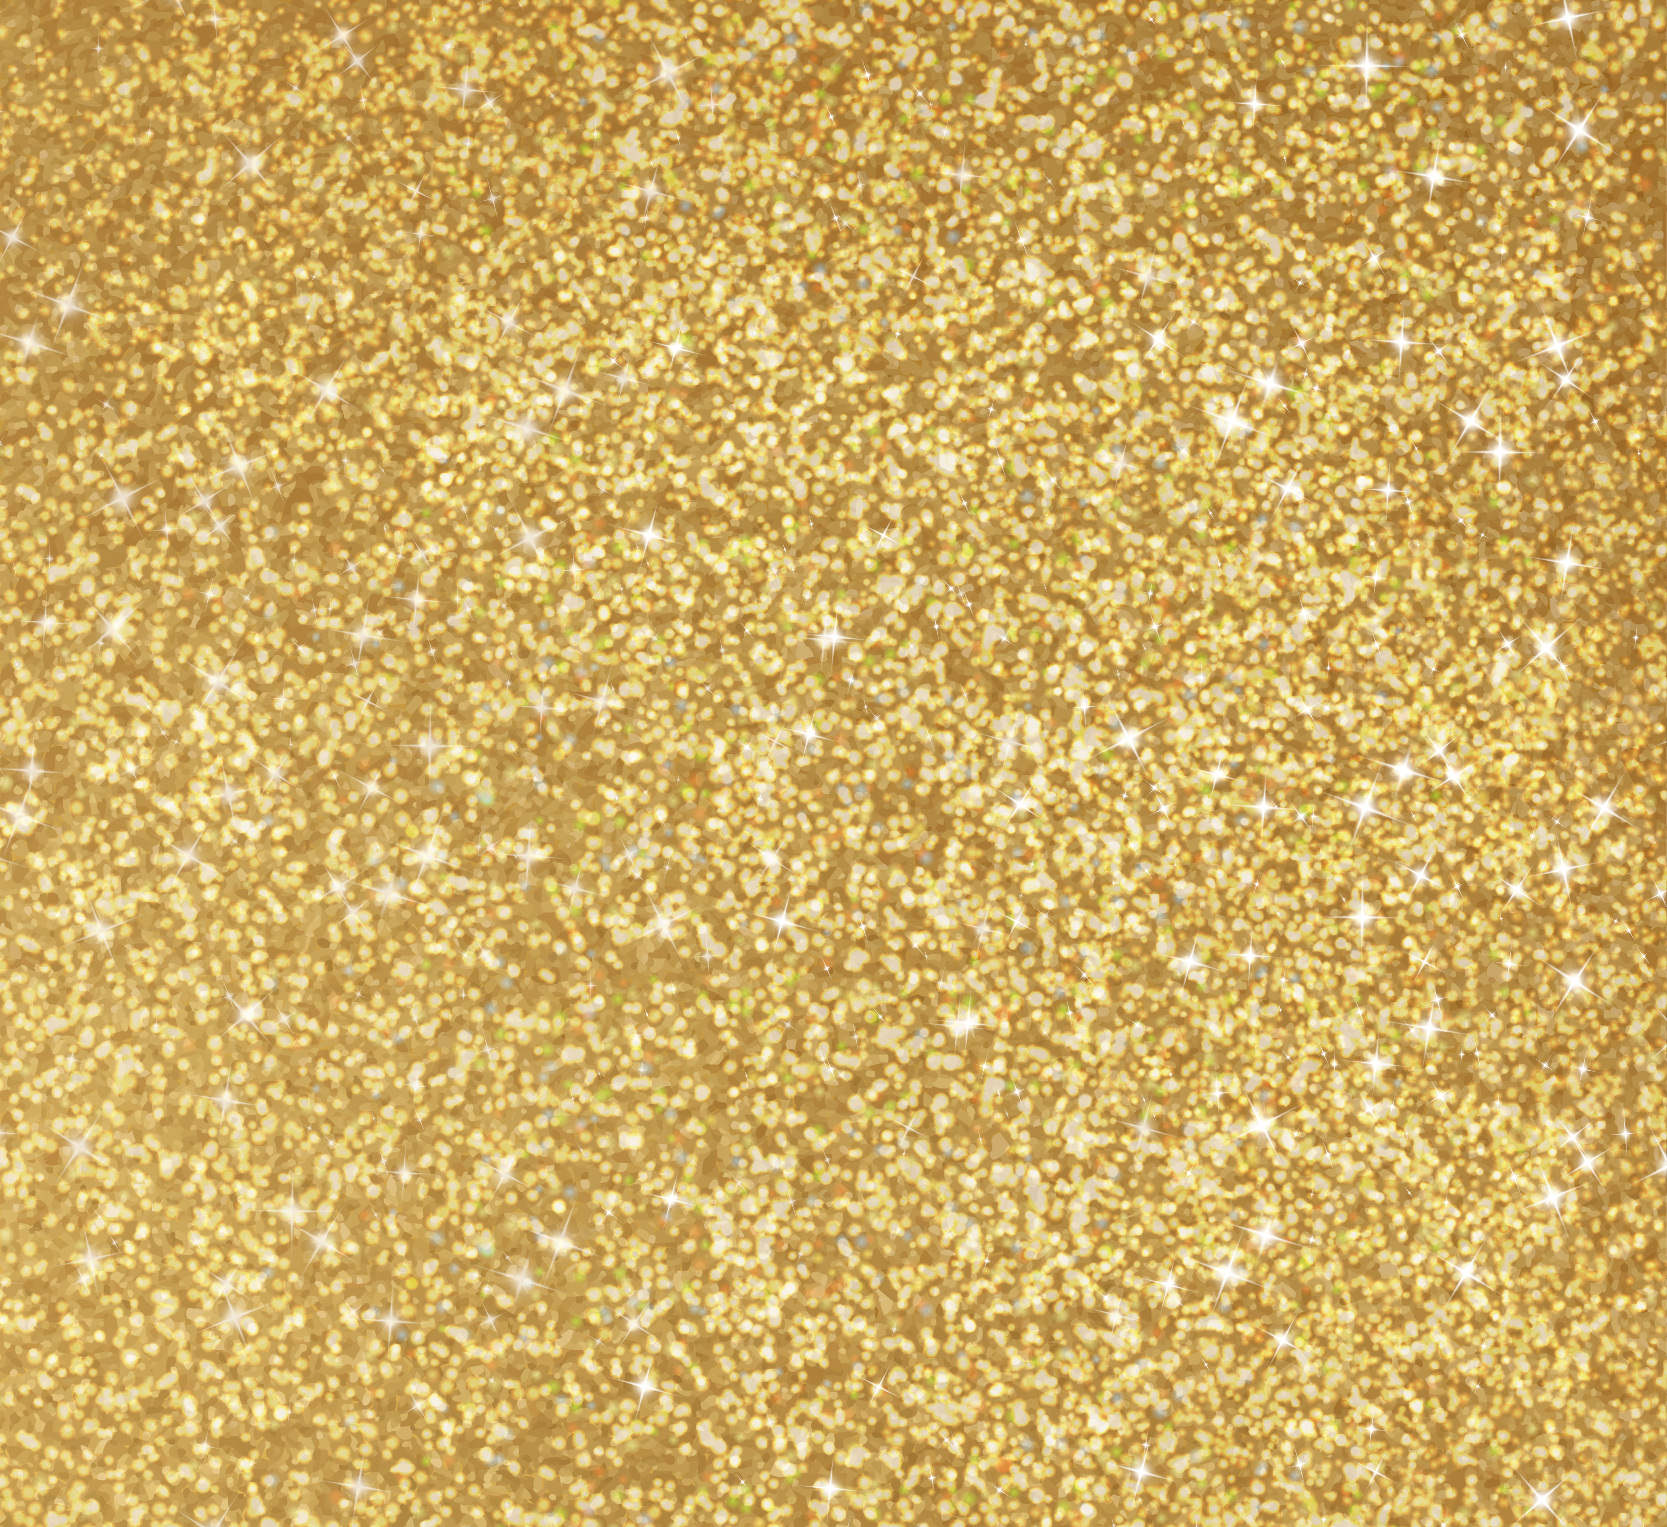 20 Gold Glitter Backgrounds HQ Backgrounds FreeCreatives